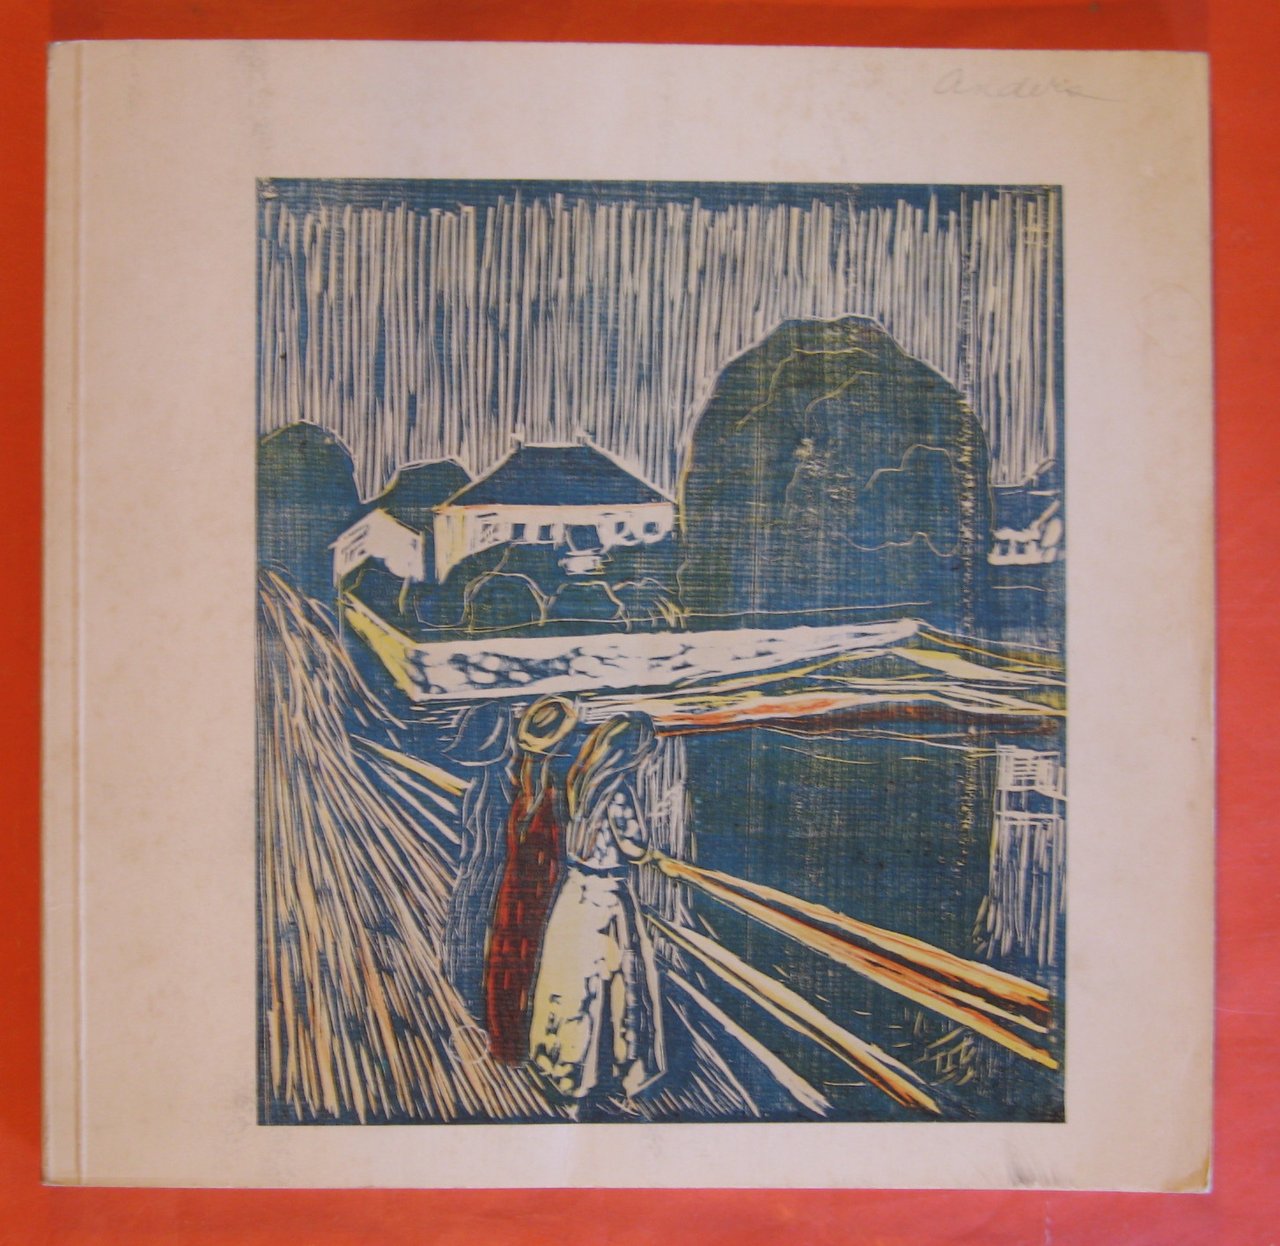 Edvard Munch: The Major Graphic